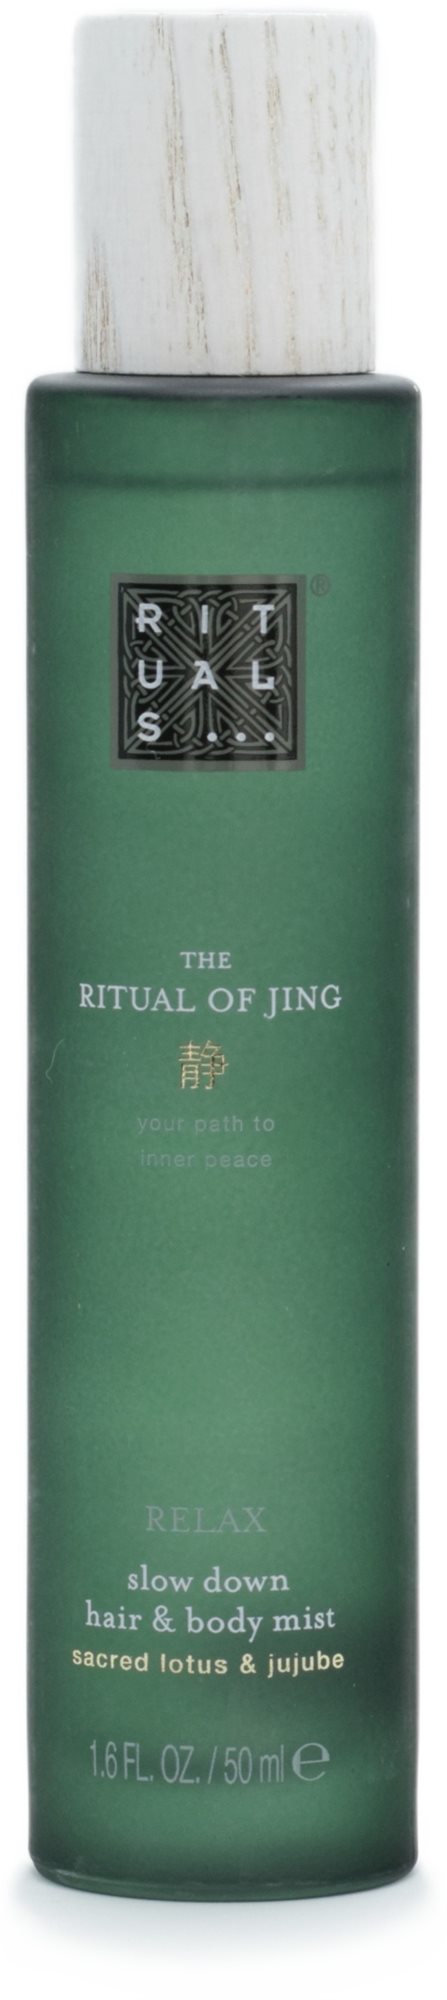 RITUALS The Ritual of Jing Hair & Body Mist 50 ml